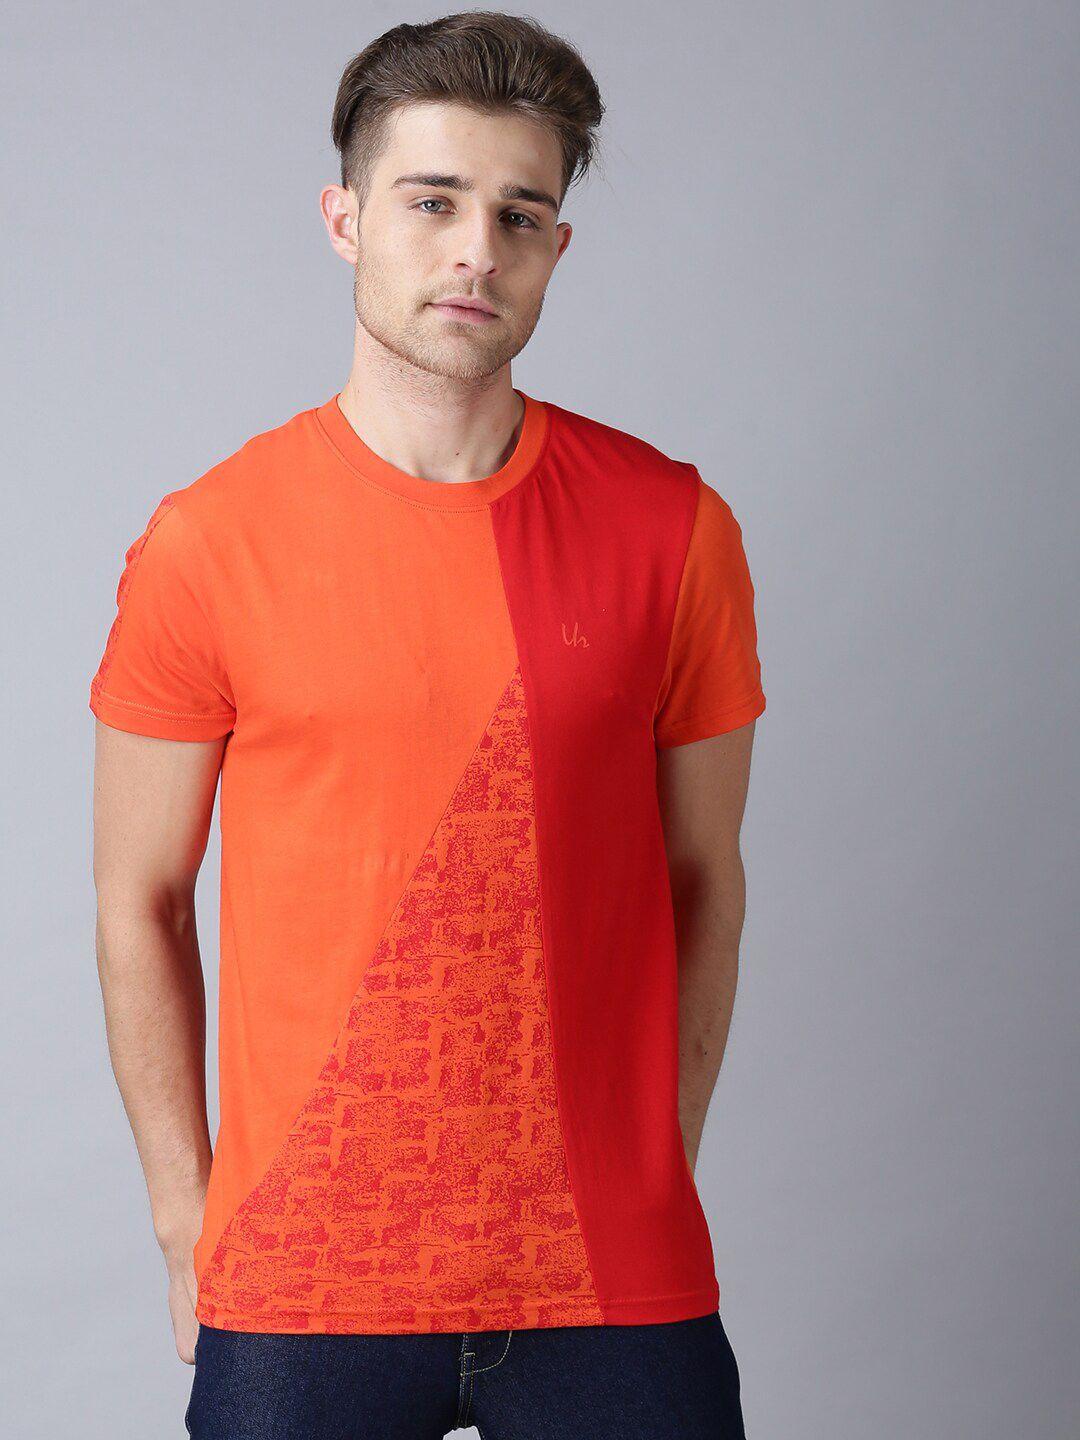 urgear-men-orange-typography-printed-raw-edge-t-shirt